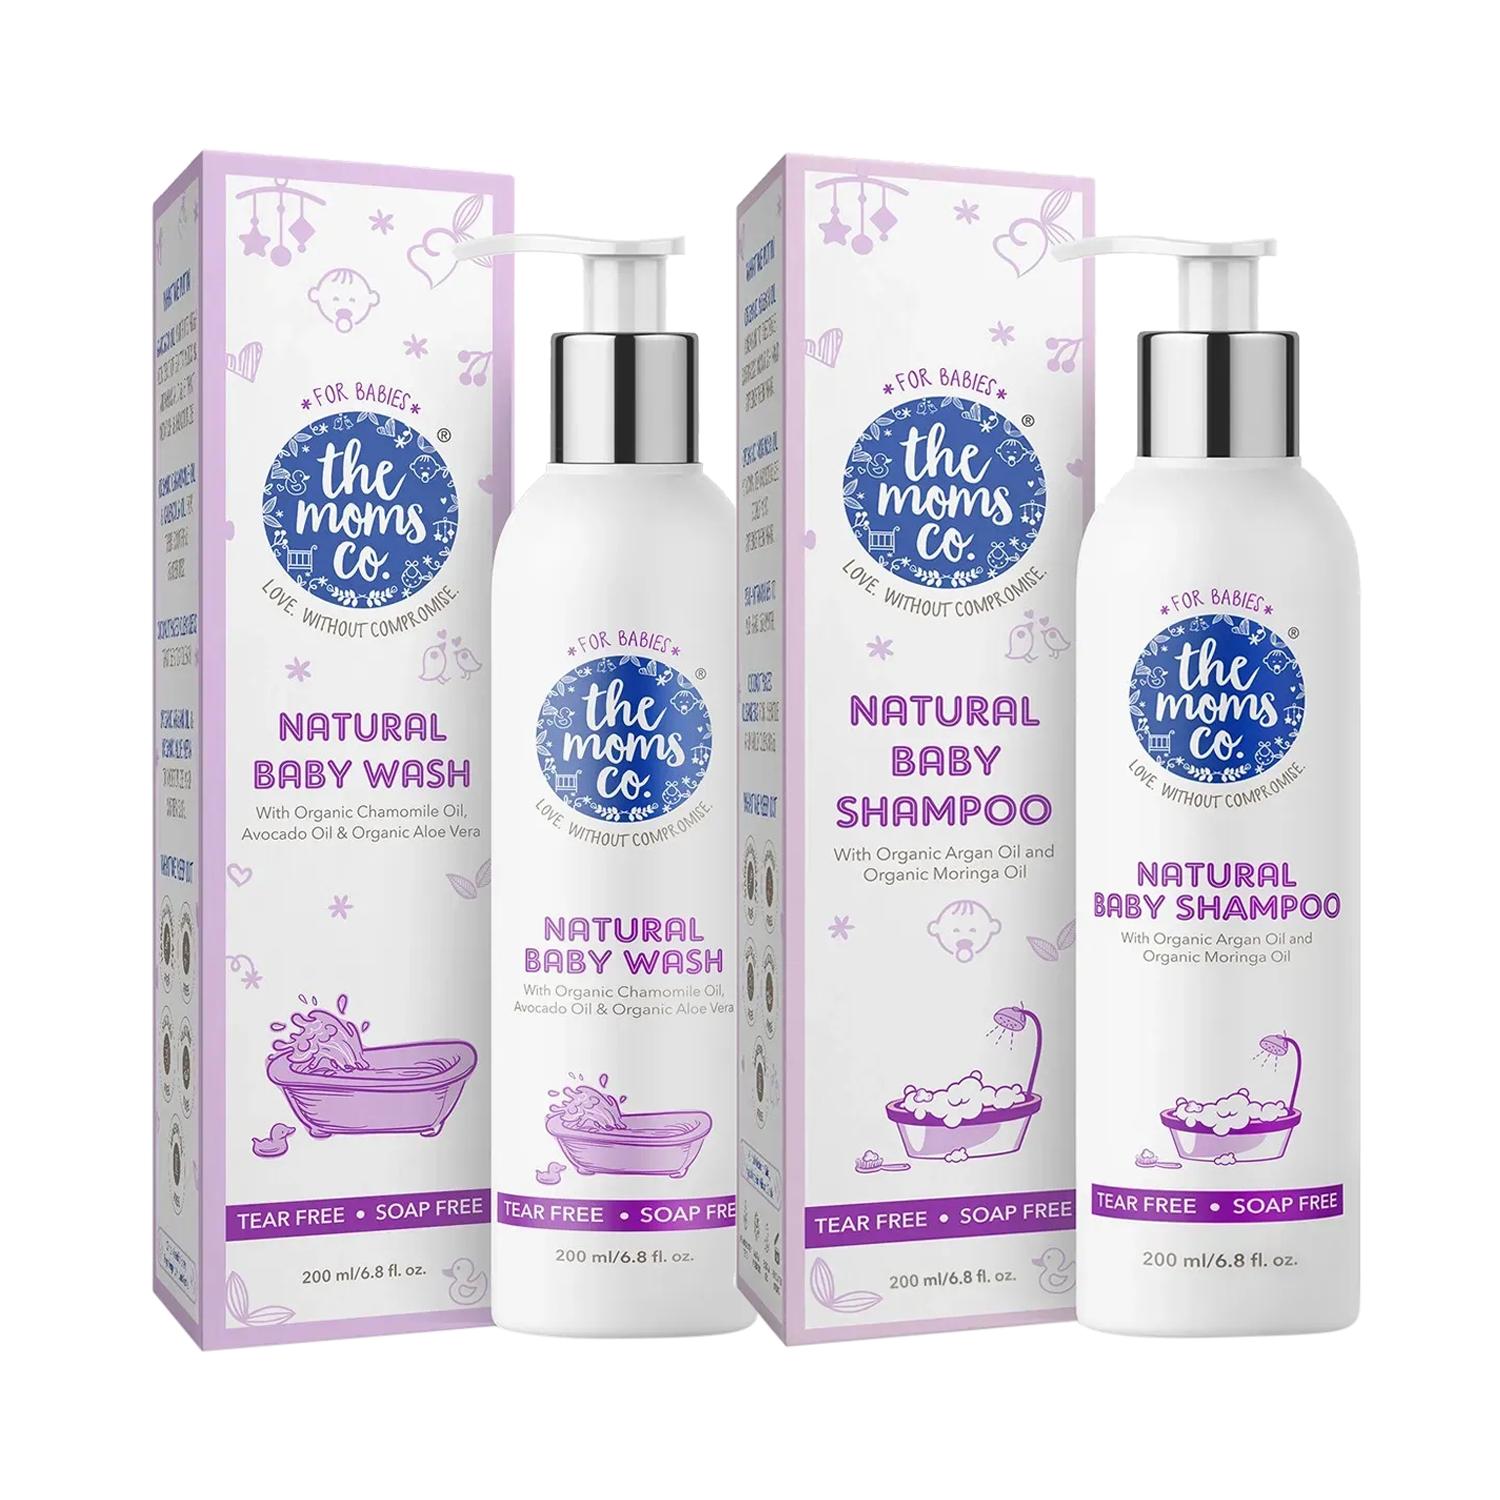 The Mom's Co. | The Mom's Co.Baby Shampoos Organic Argan Oil and Organic Moringa Oil (200ml) Baby Wash (200ml) Combo